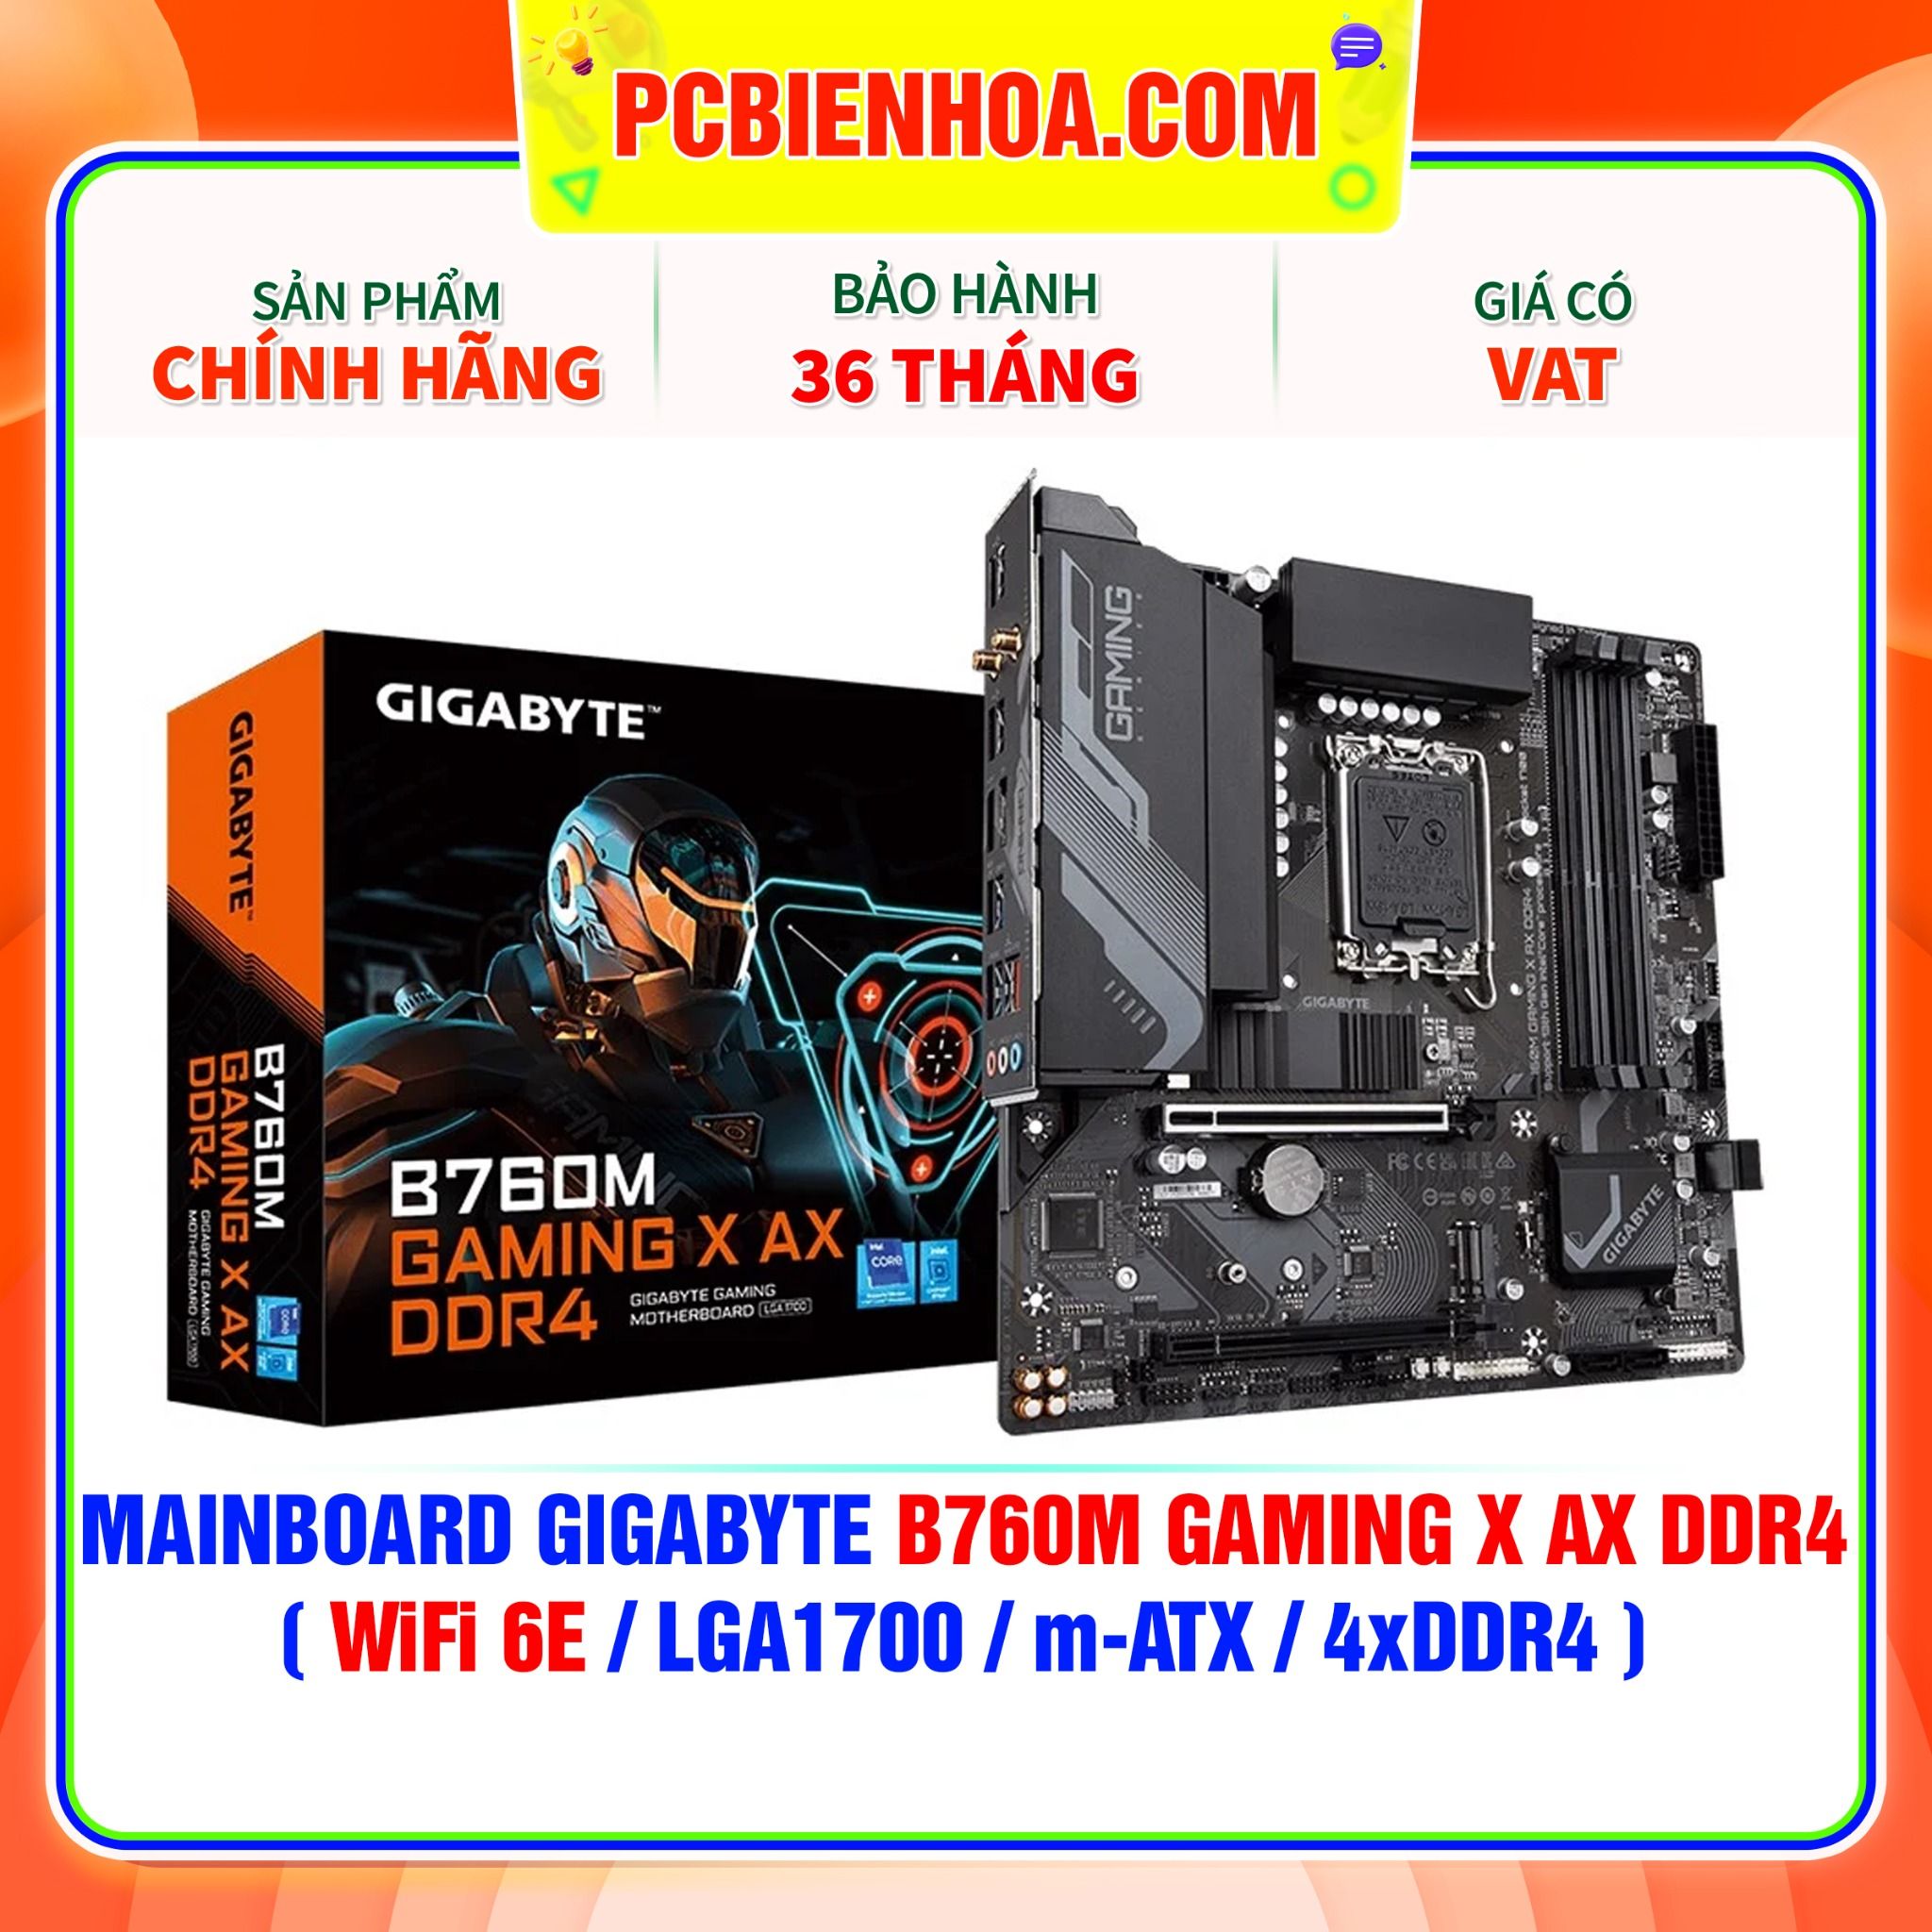  MAINBOARD GIGABYTE B760M GAMING X AX DDR4 ( WiFi 6E / LGA1700 / m-ATX / 4xDDR4 ) 